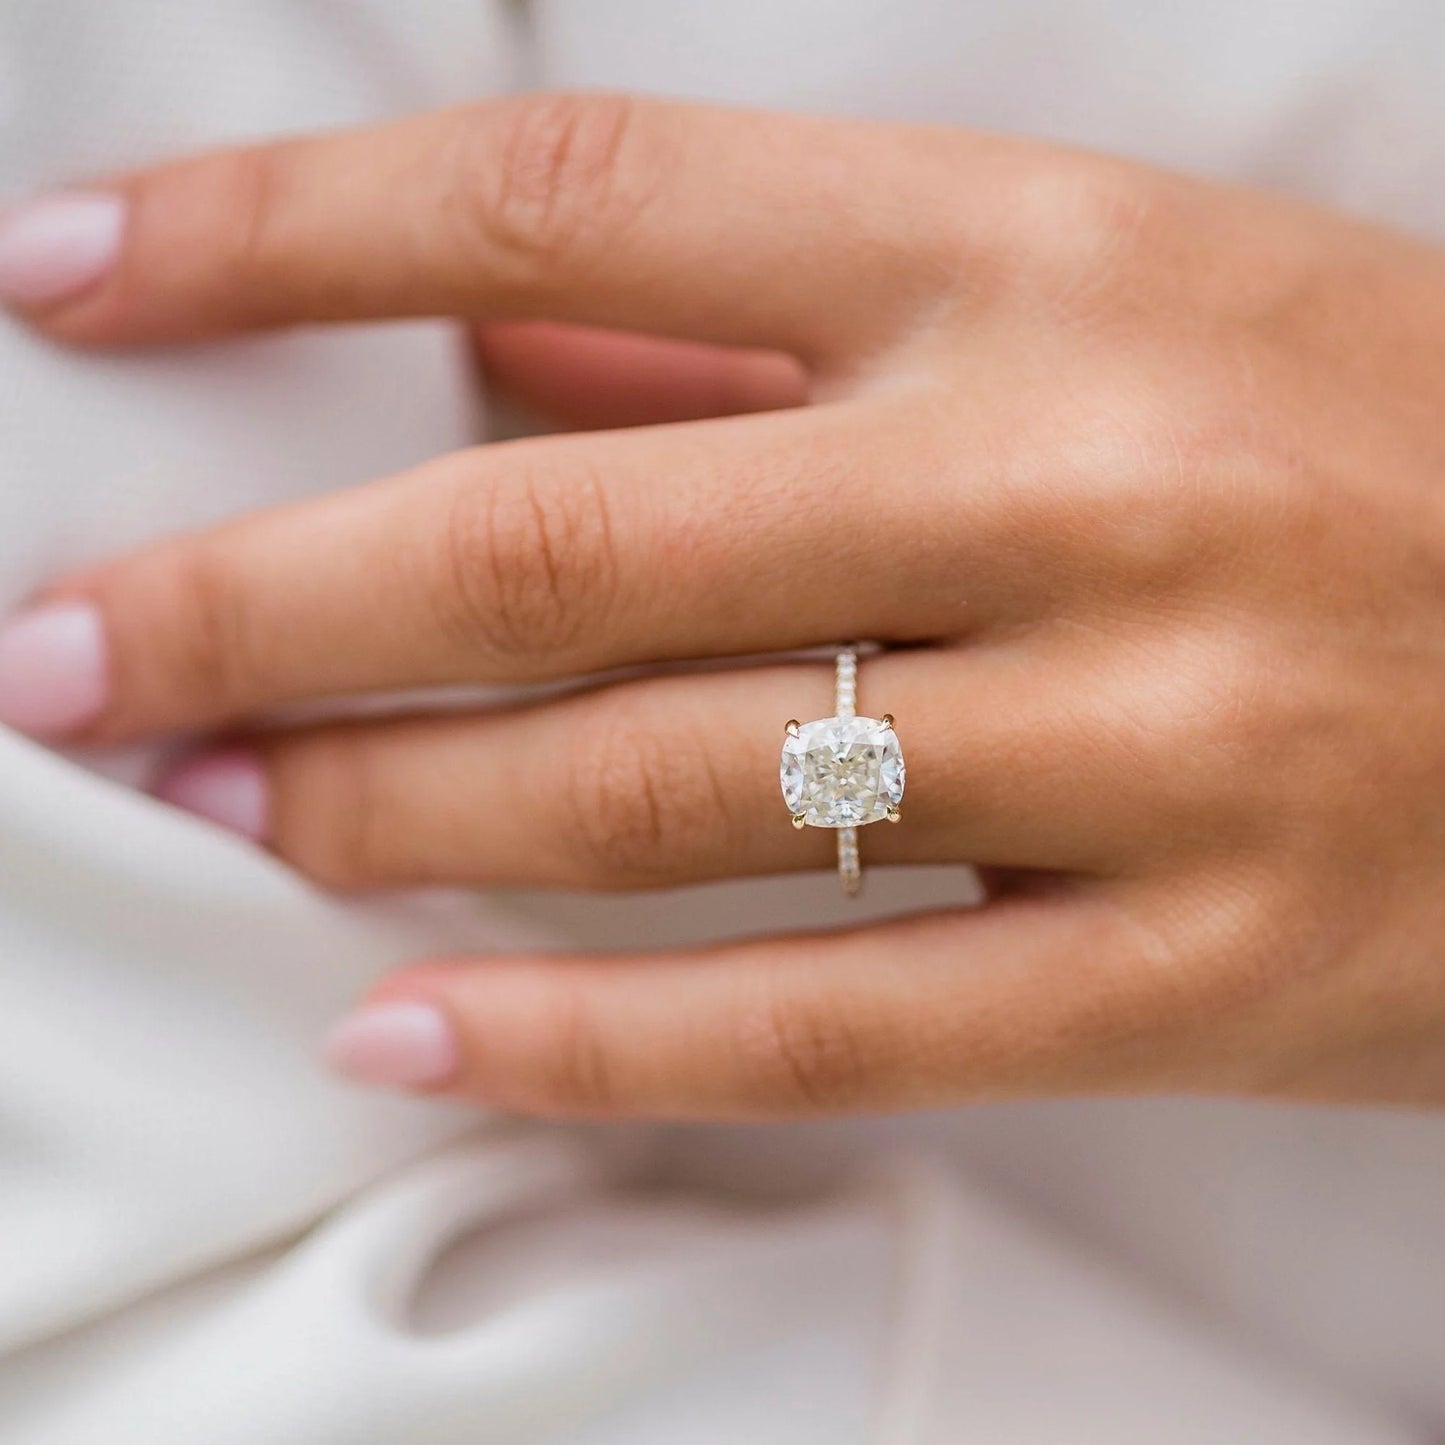 3 Carat Cushion Cut Hidden High Halo Moissanite Diamond Engagement Ring with Micro Pavé Band